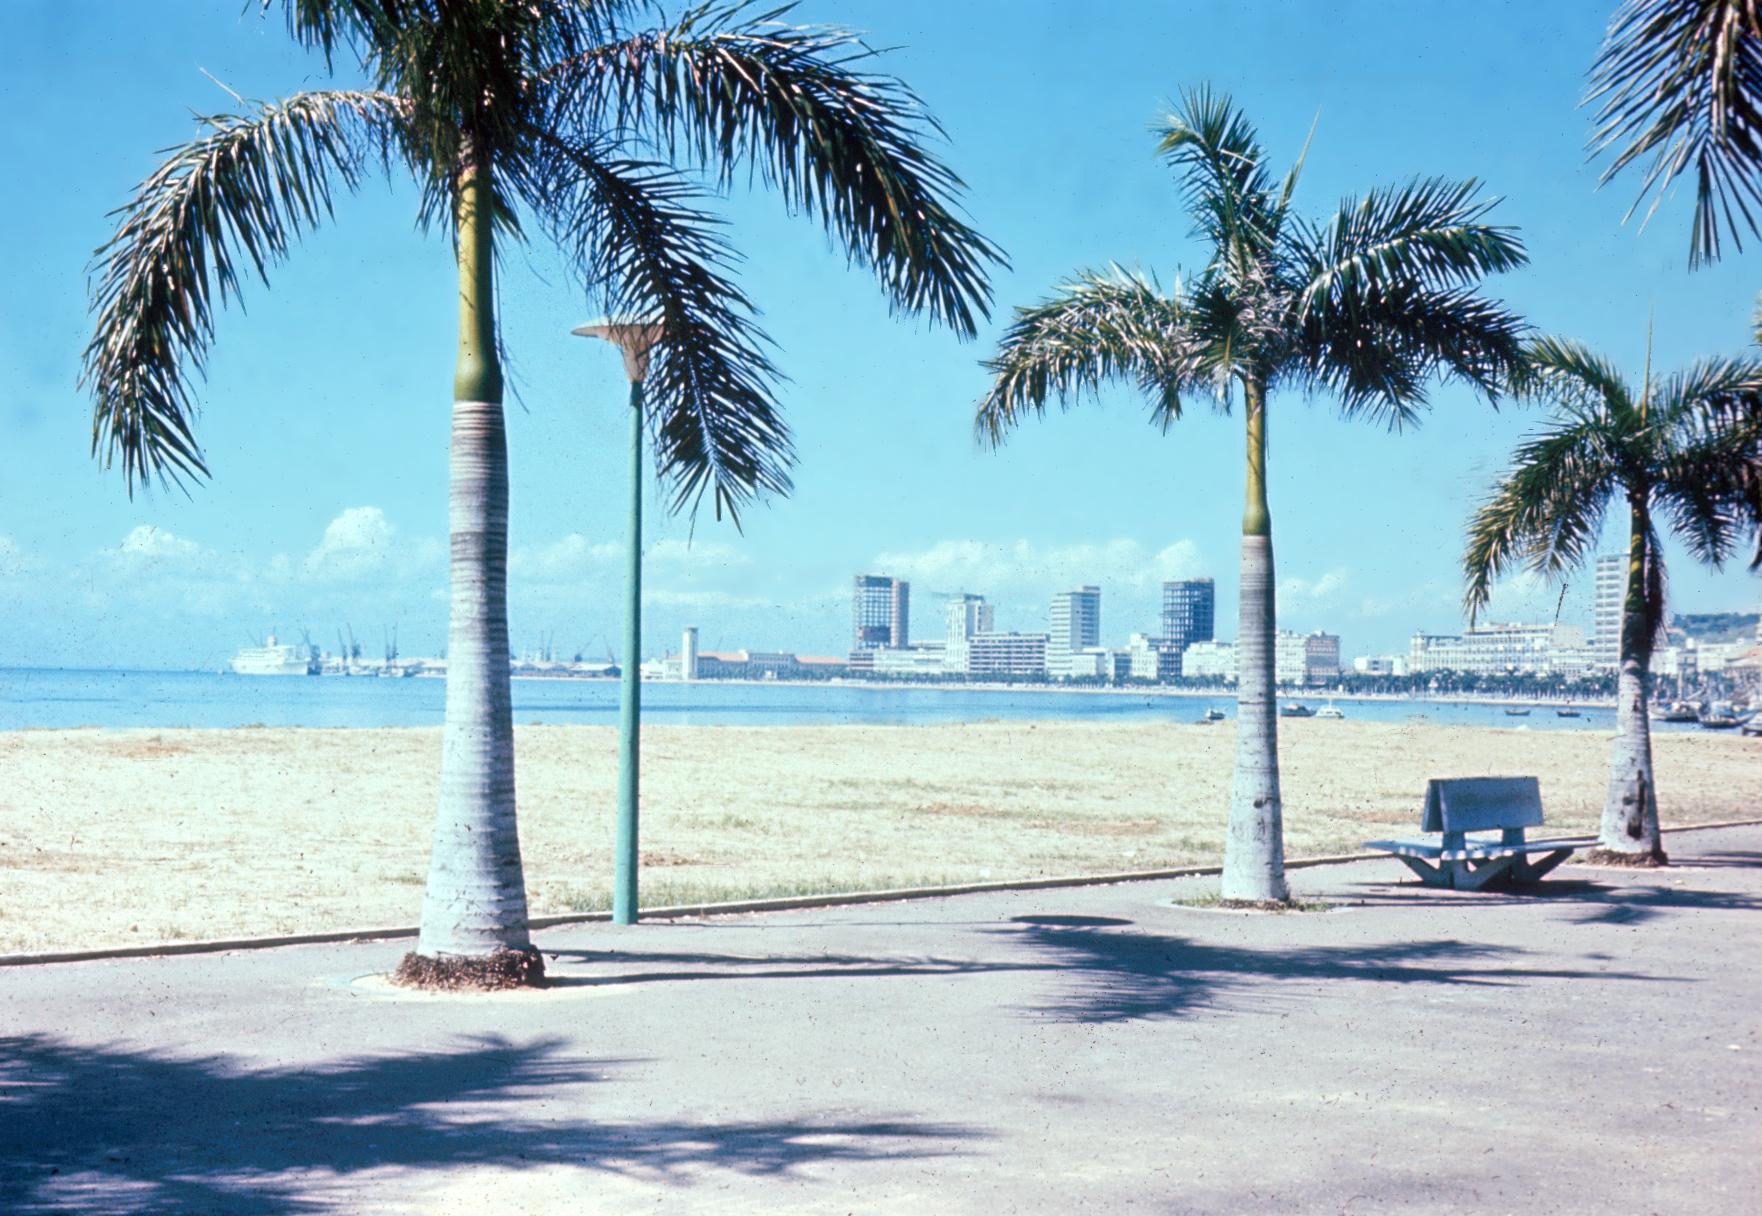 City of Luanda Viewed across the Bay